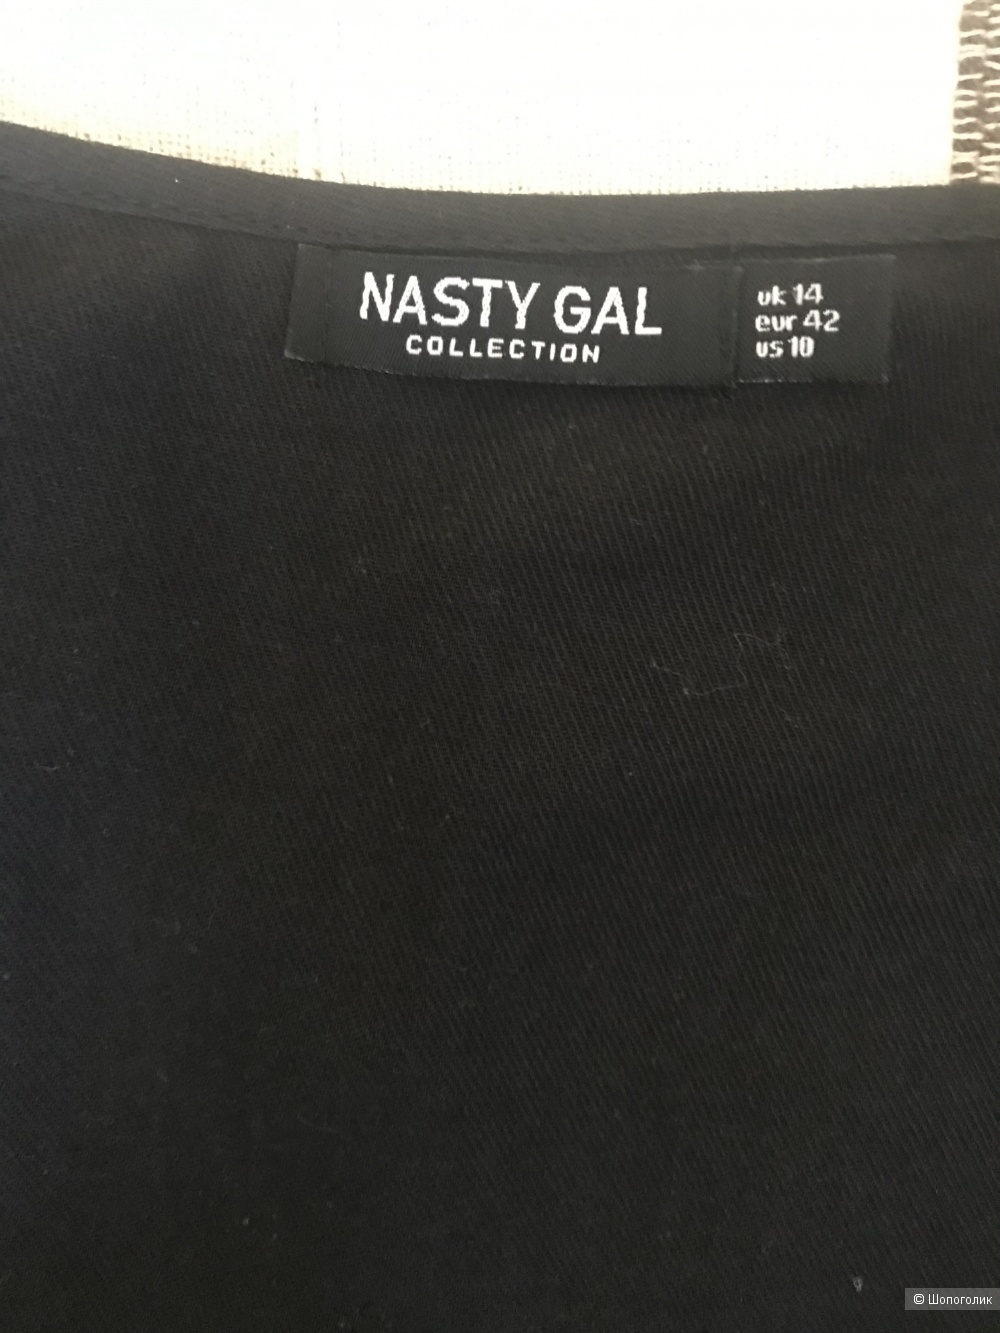 Платье Nasty gal collection, eur42